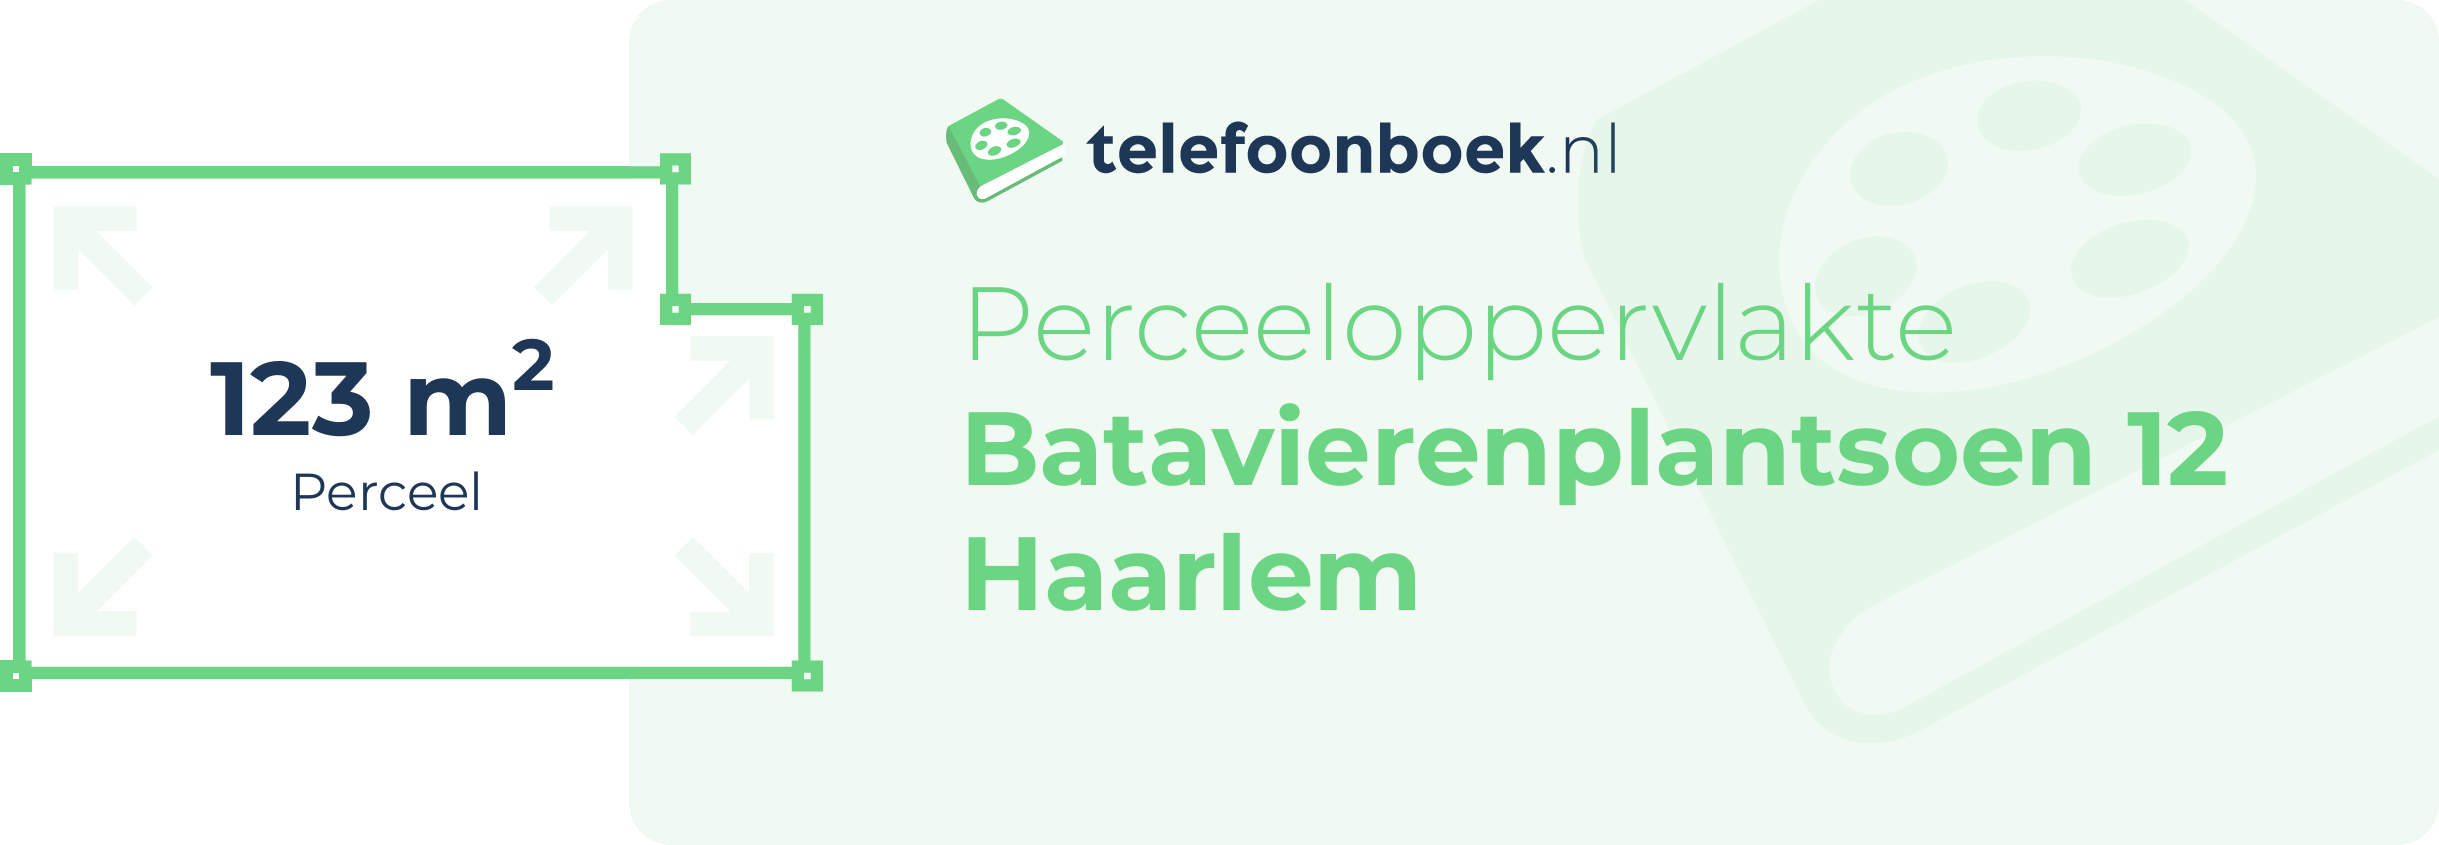 Perceeloppervlakte Batavierenplantsoen 12 Haarlem